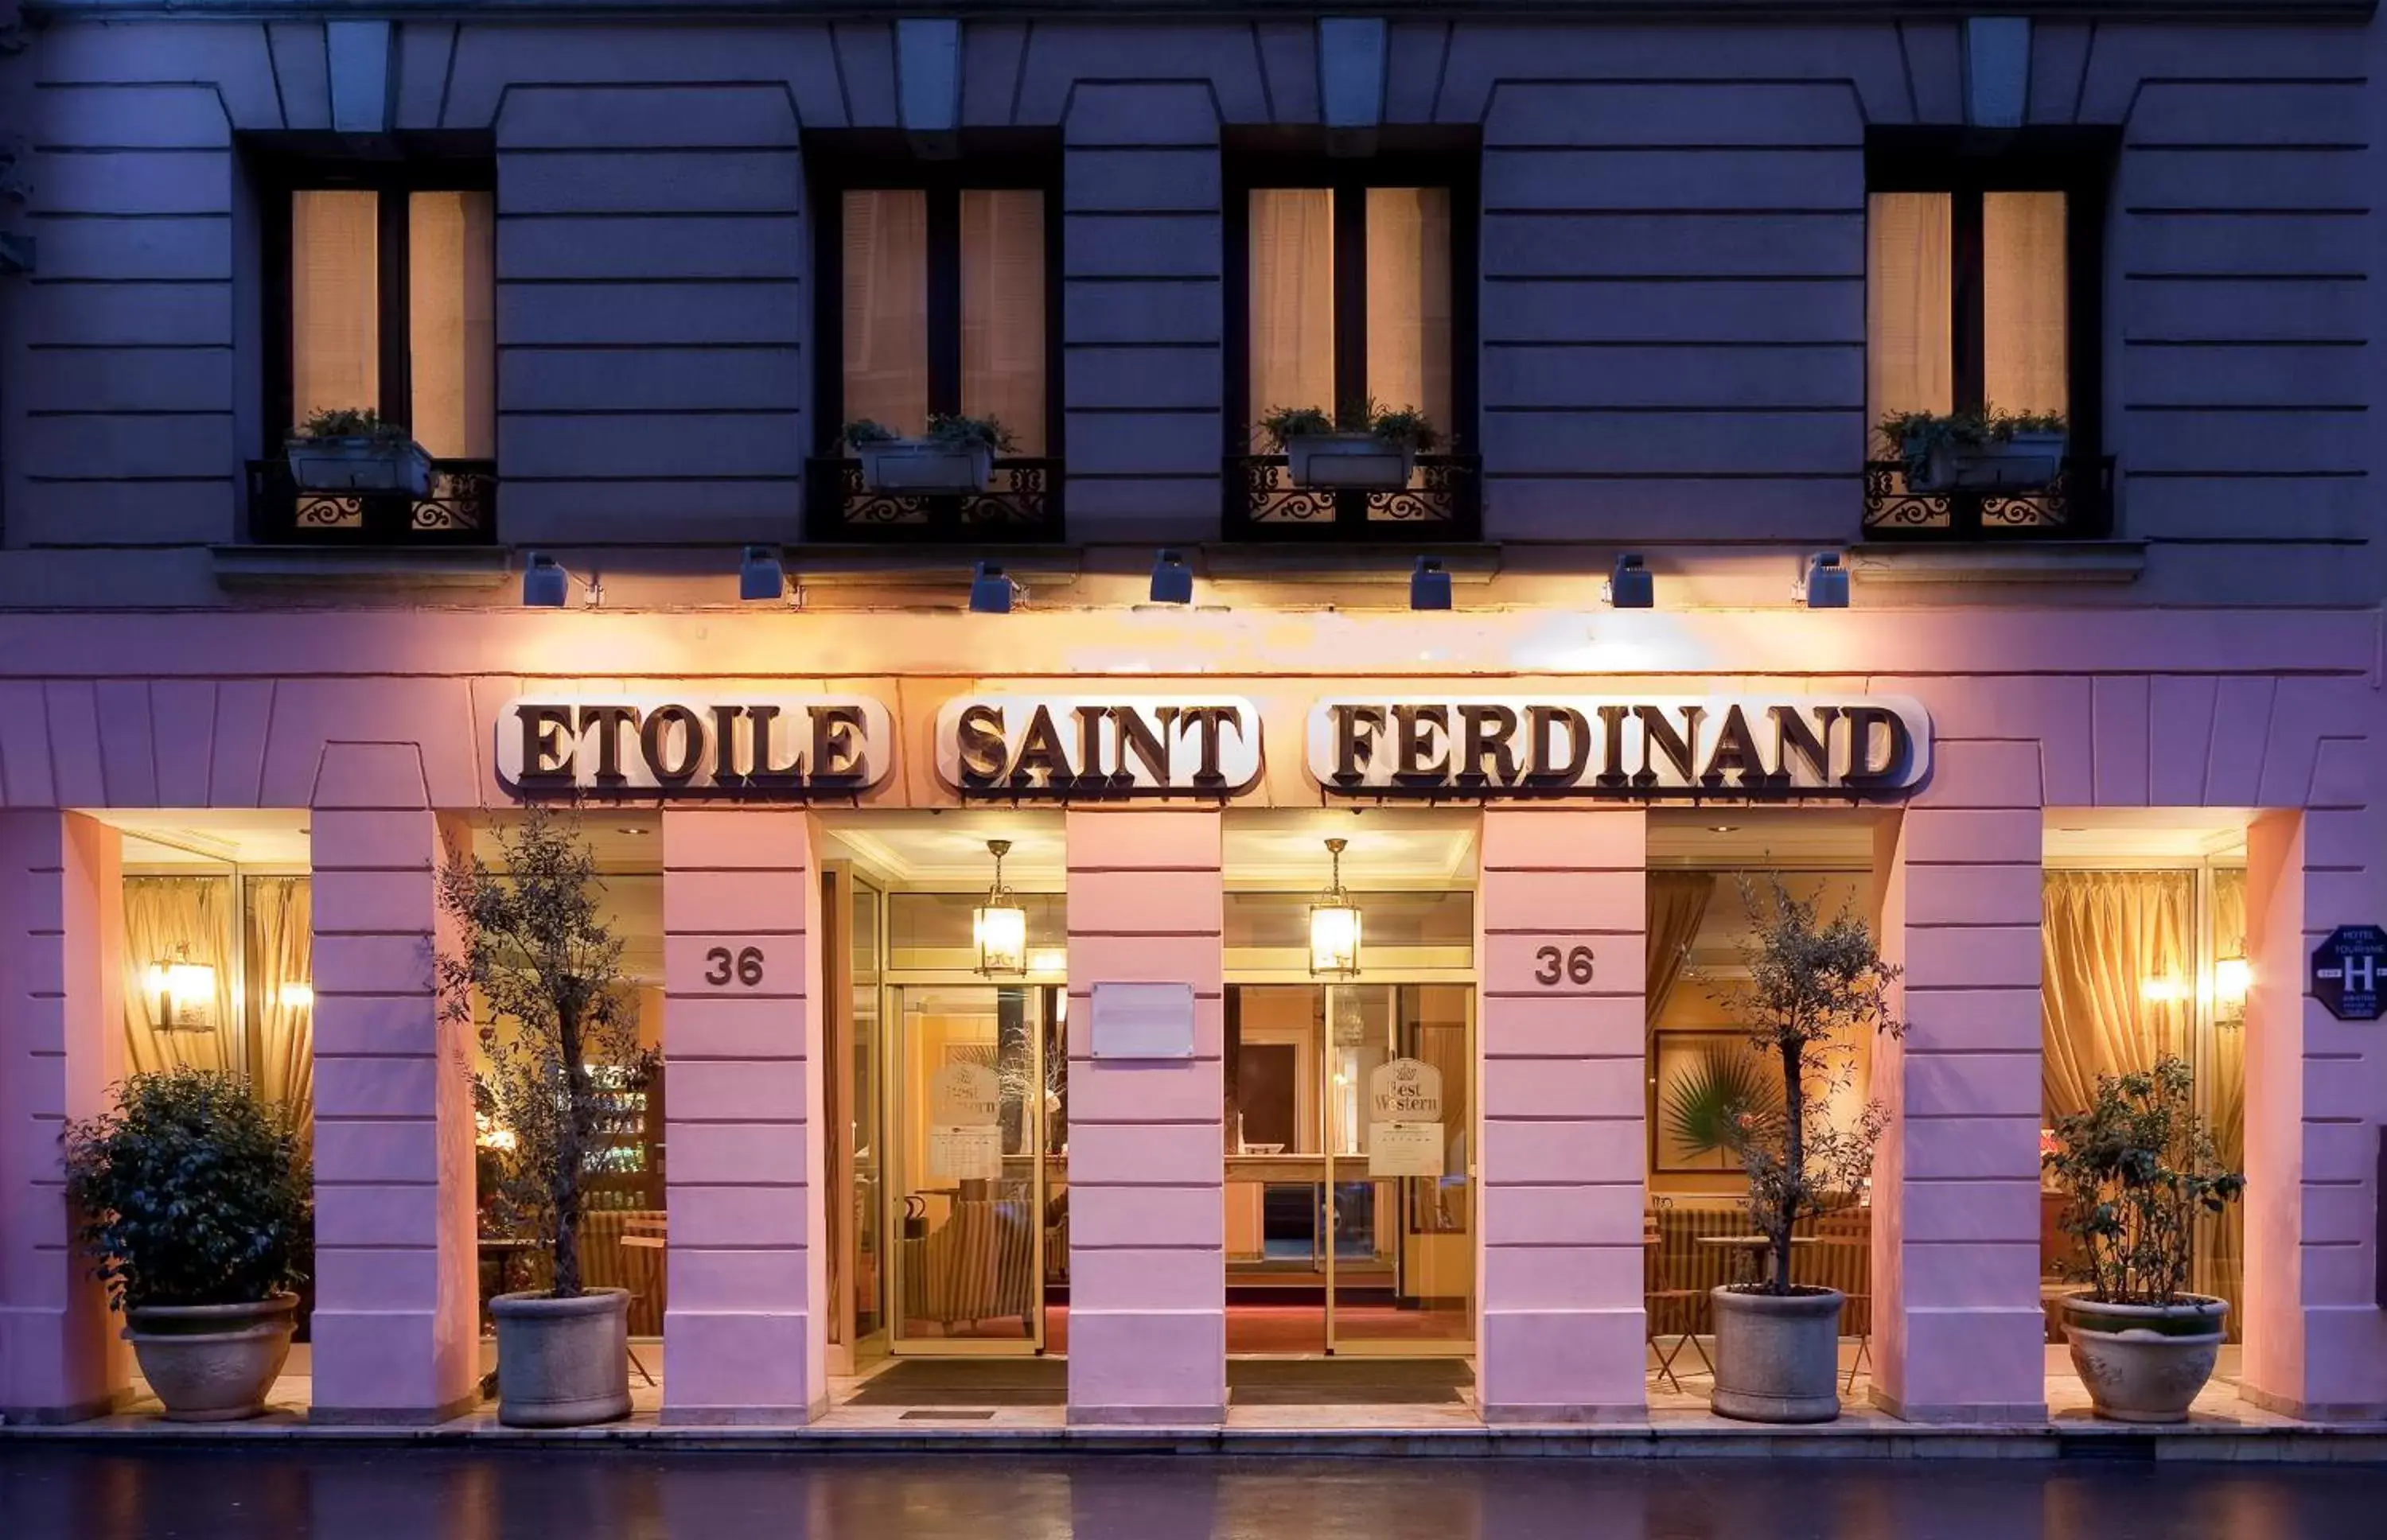 Facade/Entrance in Hotel Etoile Saint Ferdinand by Happyculture